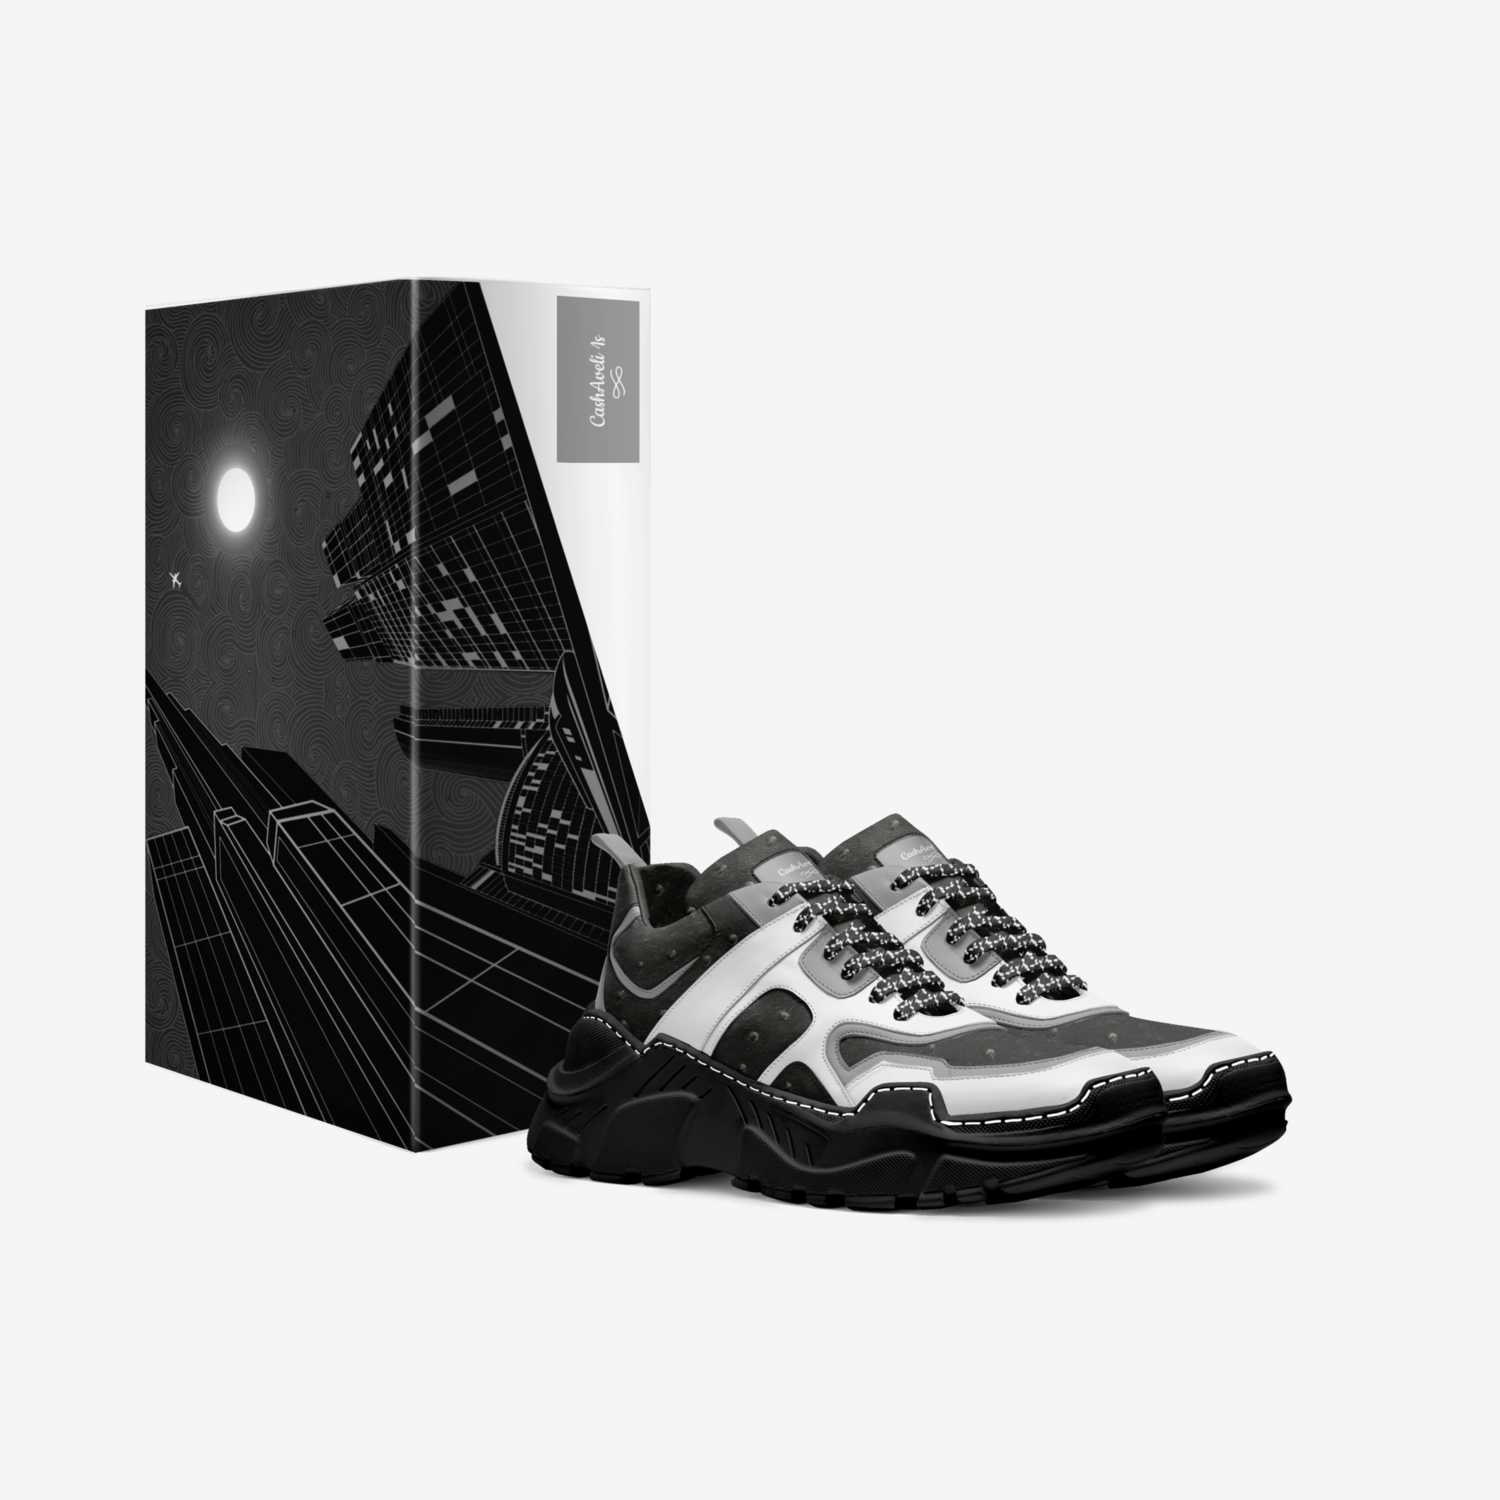 CashAveli  custom made in Italy shoes by Cordarius Gatlin | Box view